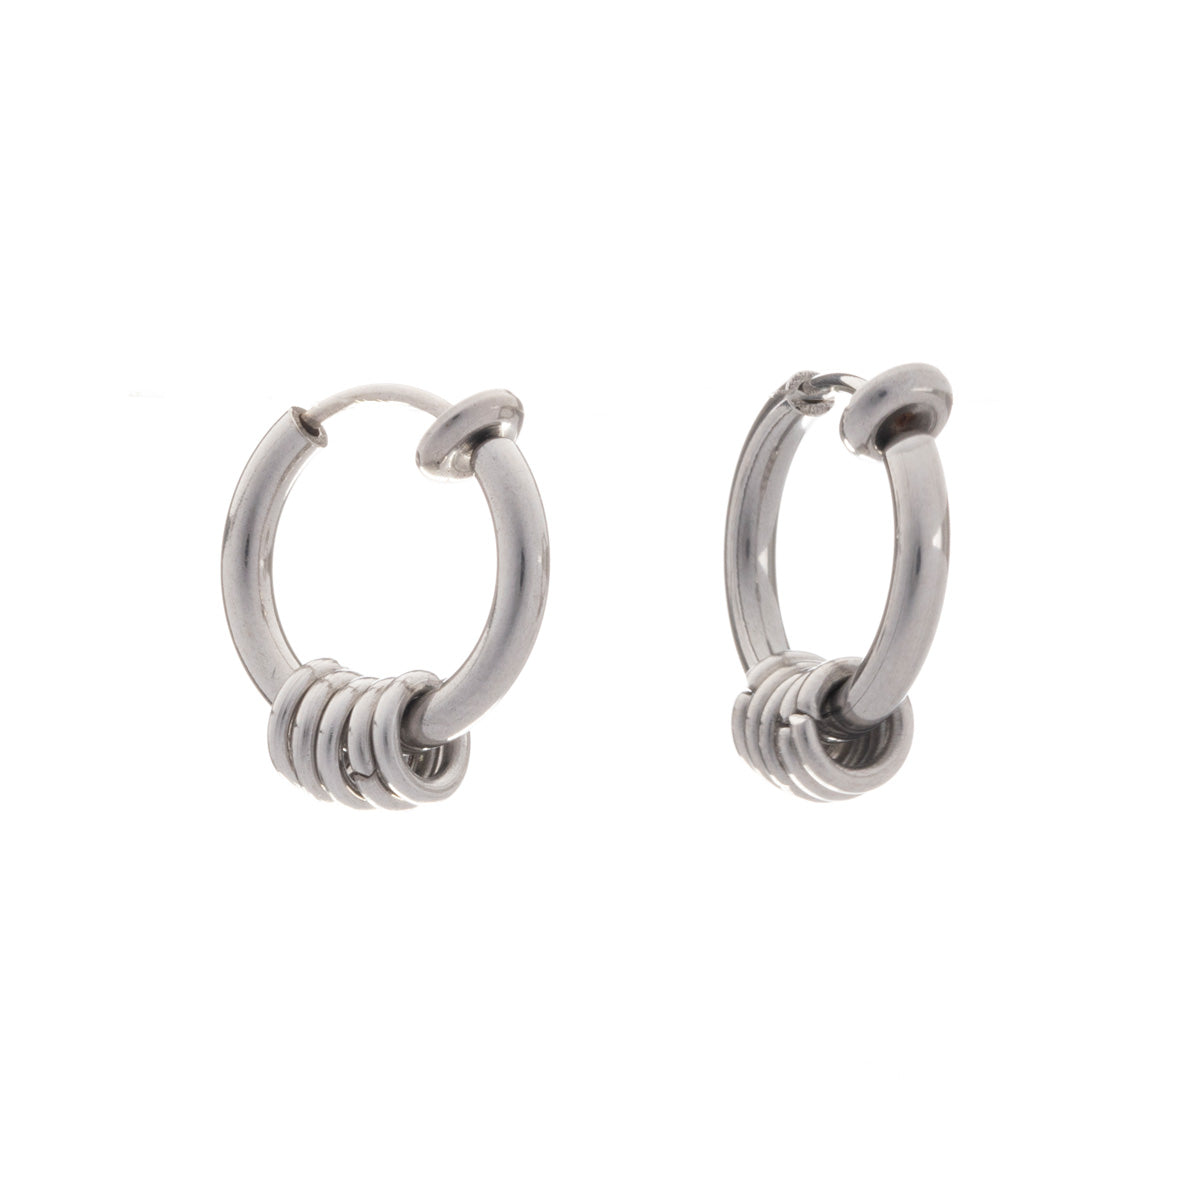 Steel ring clip earrings with rings (steel 316L)